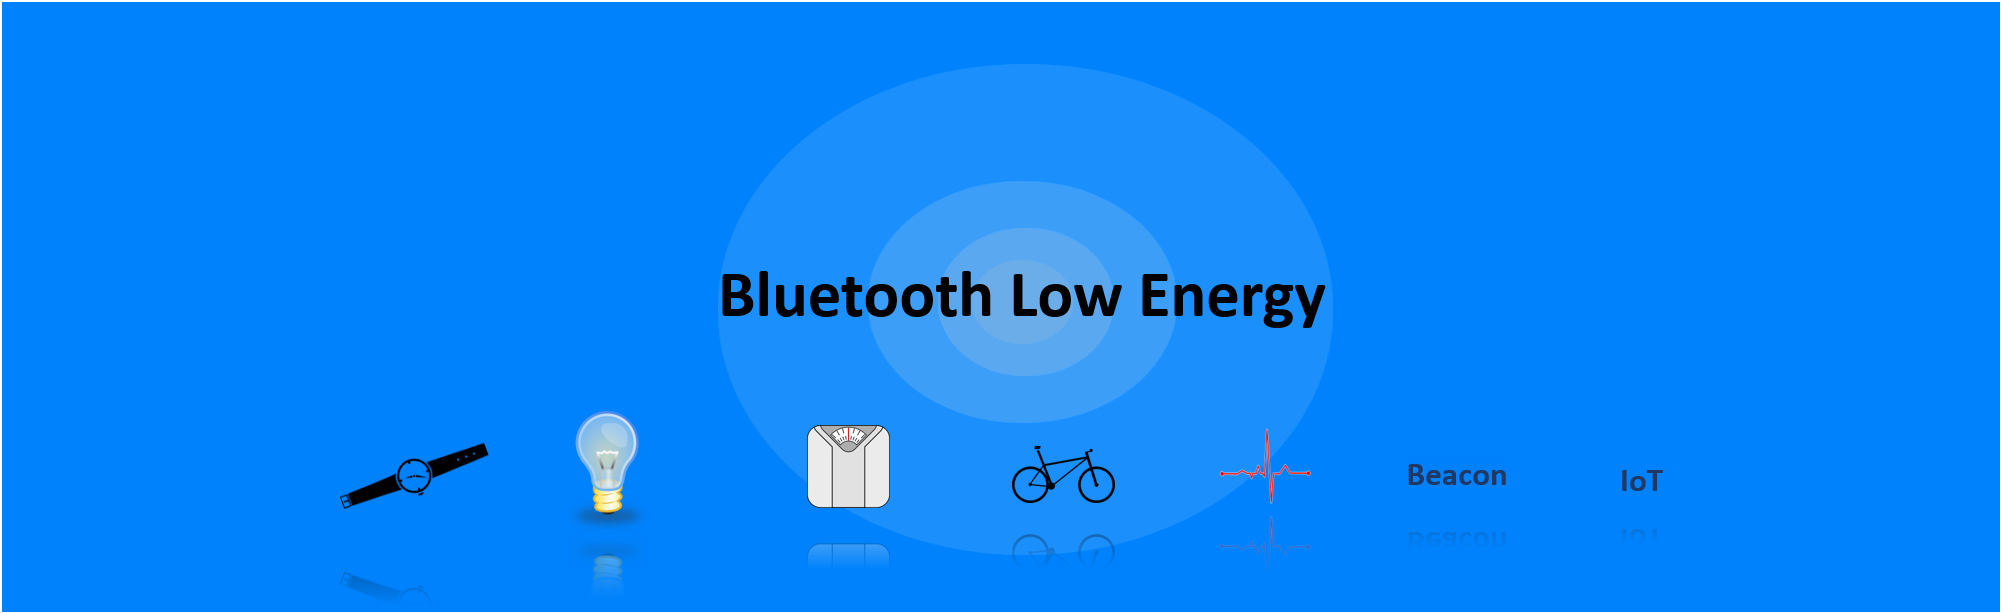 Bluetooth Low Energy технология. Ble (Bluetooth Low Energy) картинки. Bluetooth Low Energy 5.. Bluetooth low energy